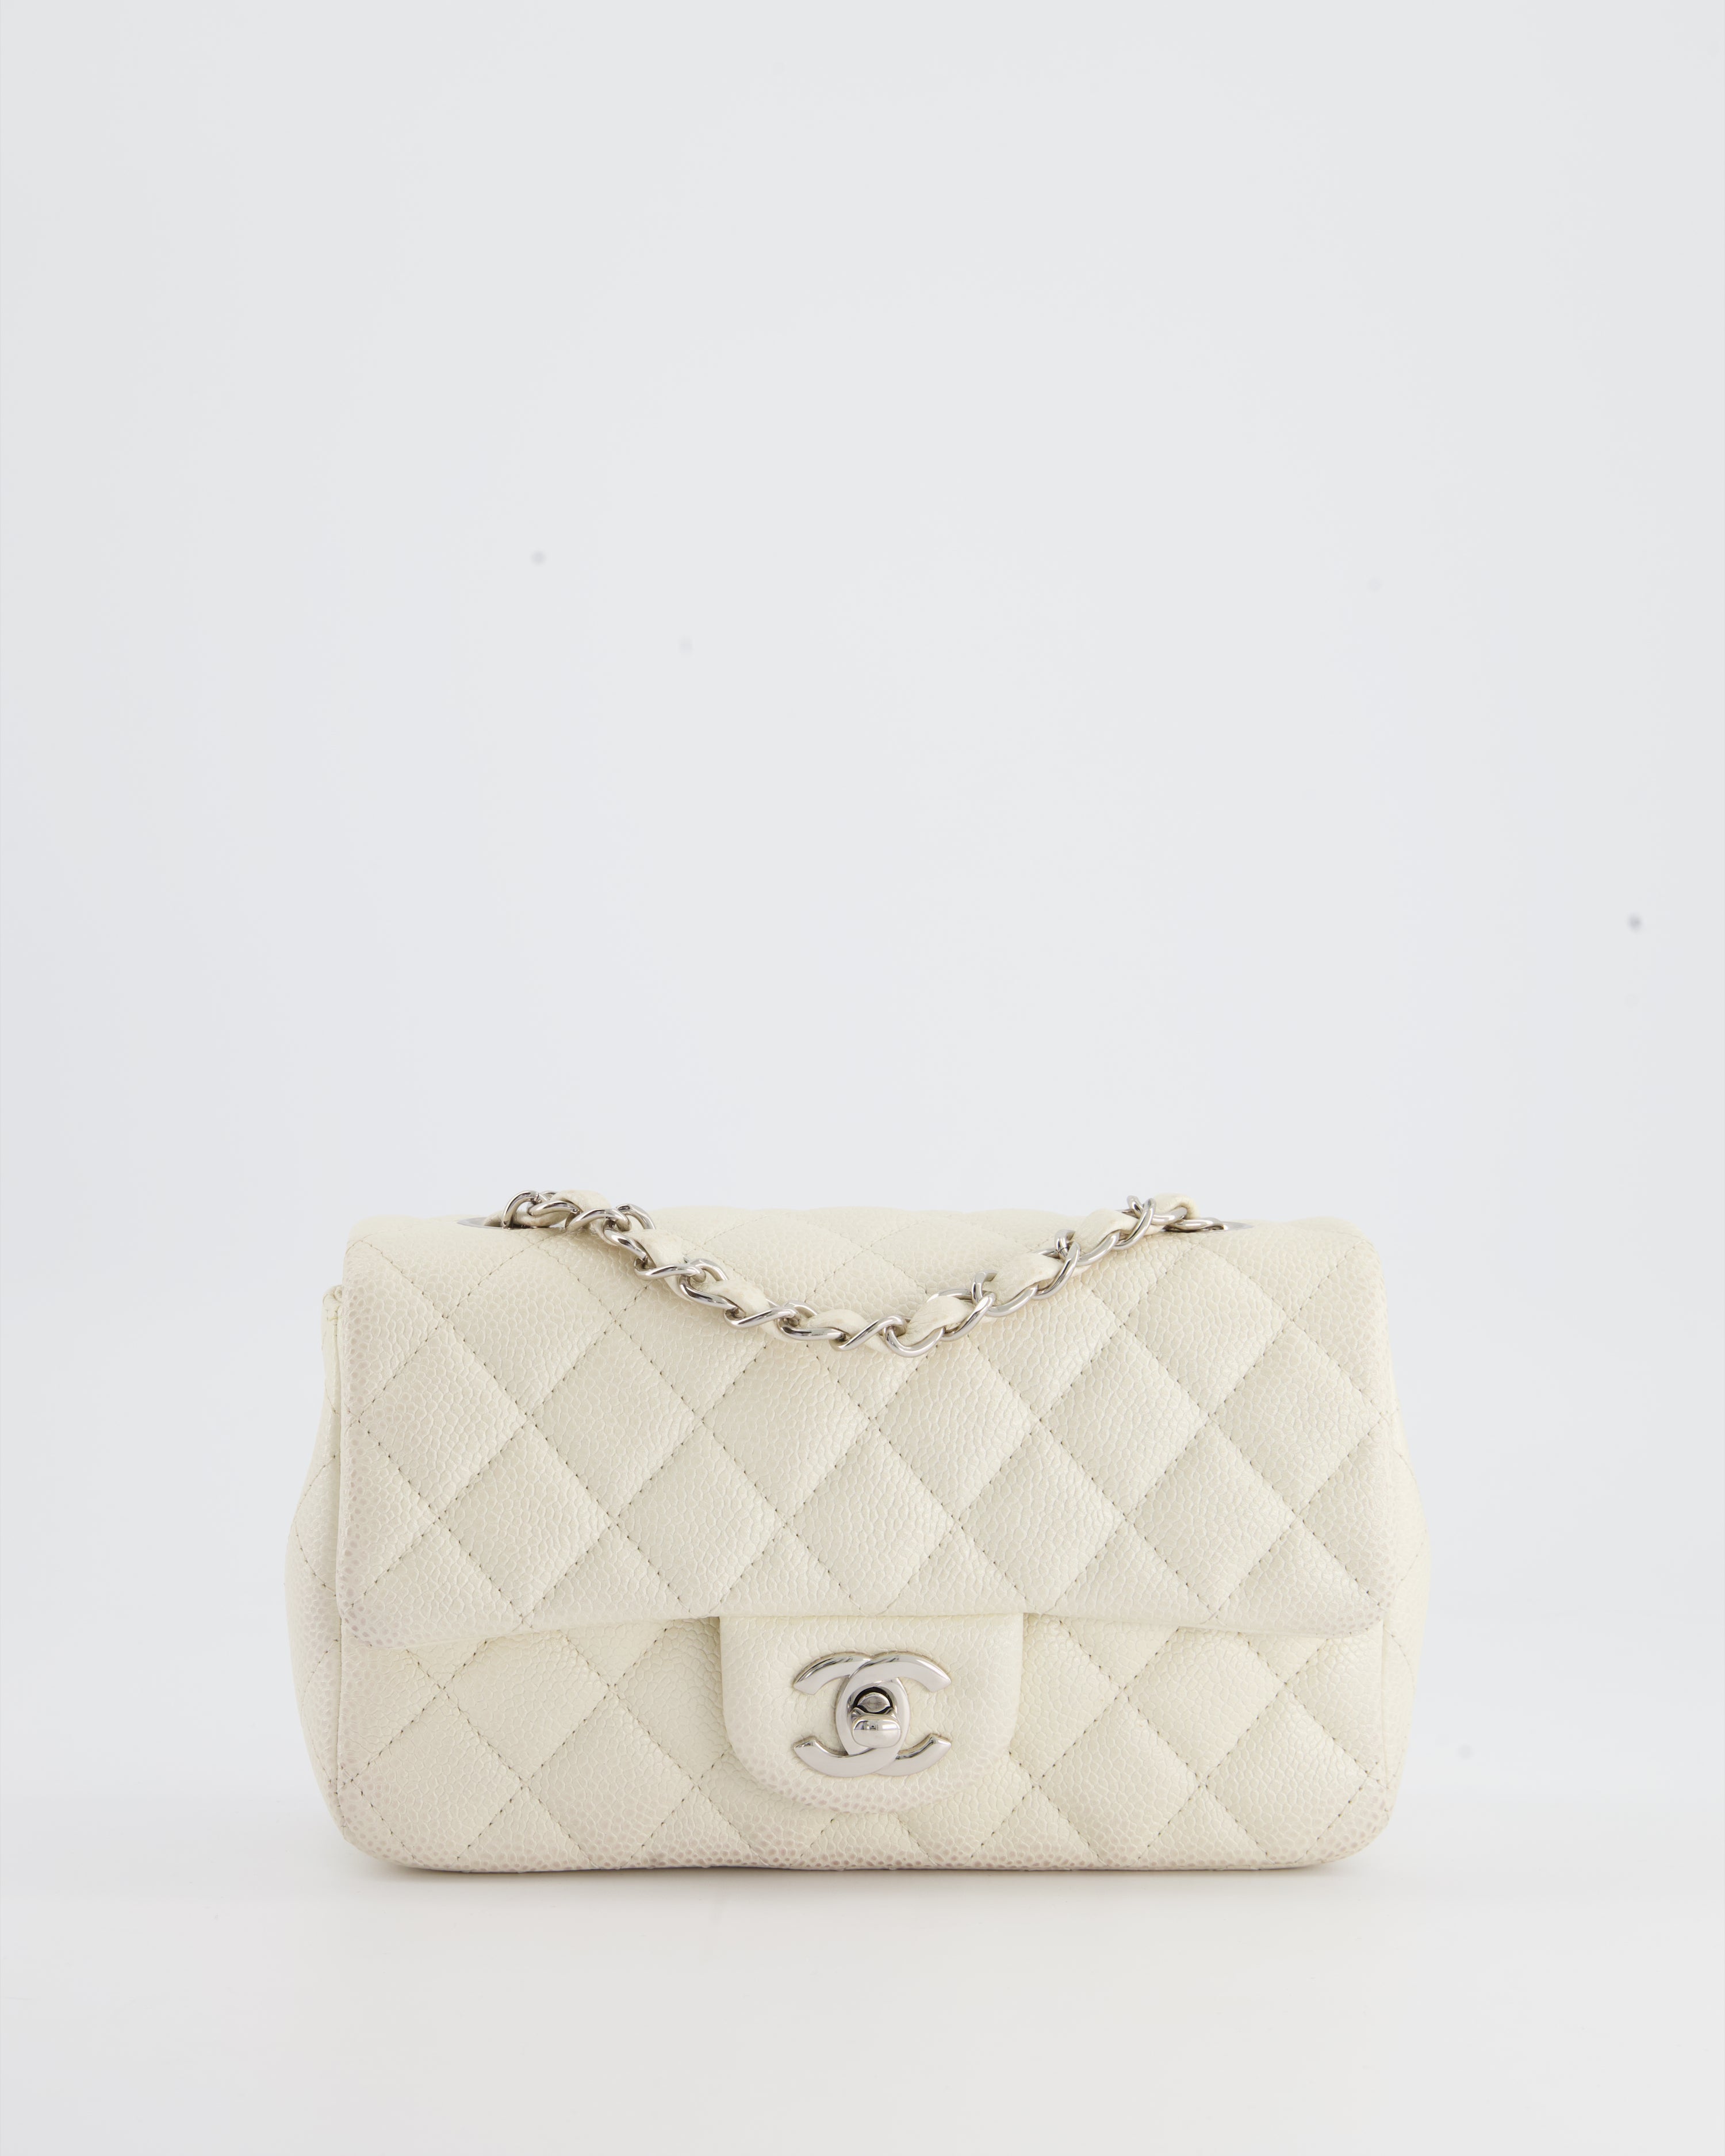 Chanel Top Handle Mini Rectangular Flap Bag Iridescent White Lambskin –  Coco Approved Studio